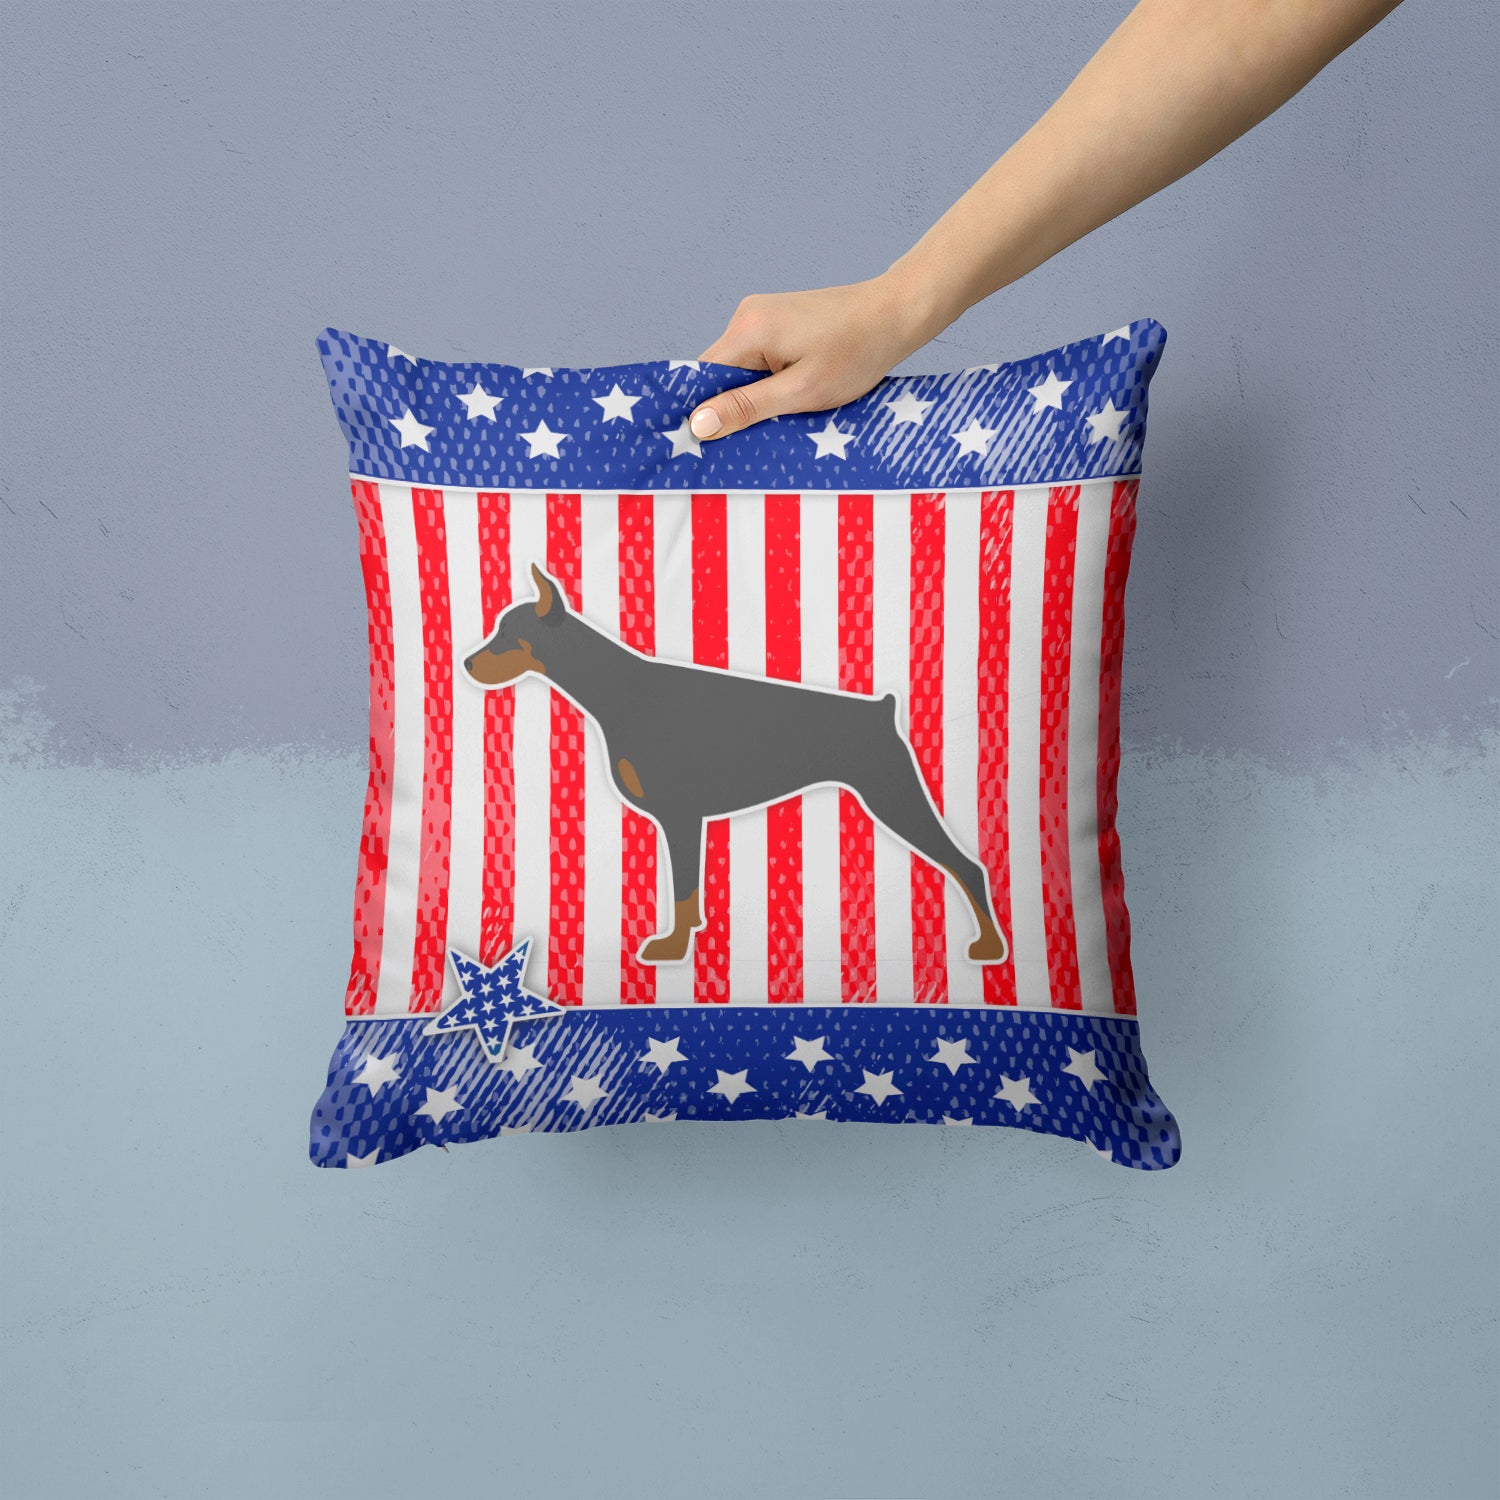 USA Patriotic Doberman Pinscher Fabric Decorative Pillow BB3360PW1414 - the-store.com